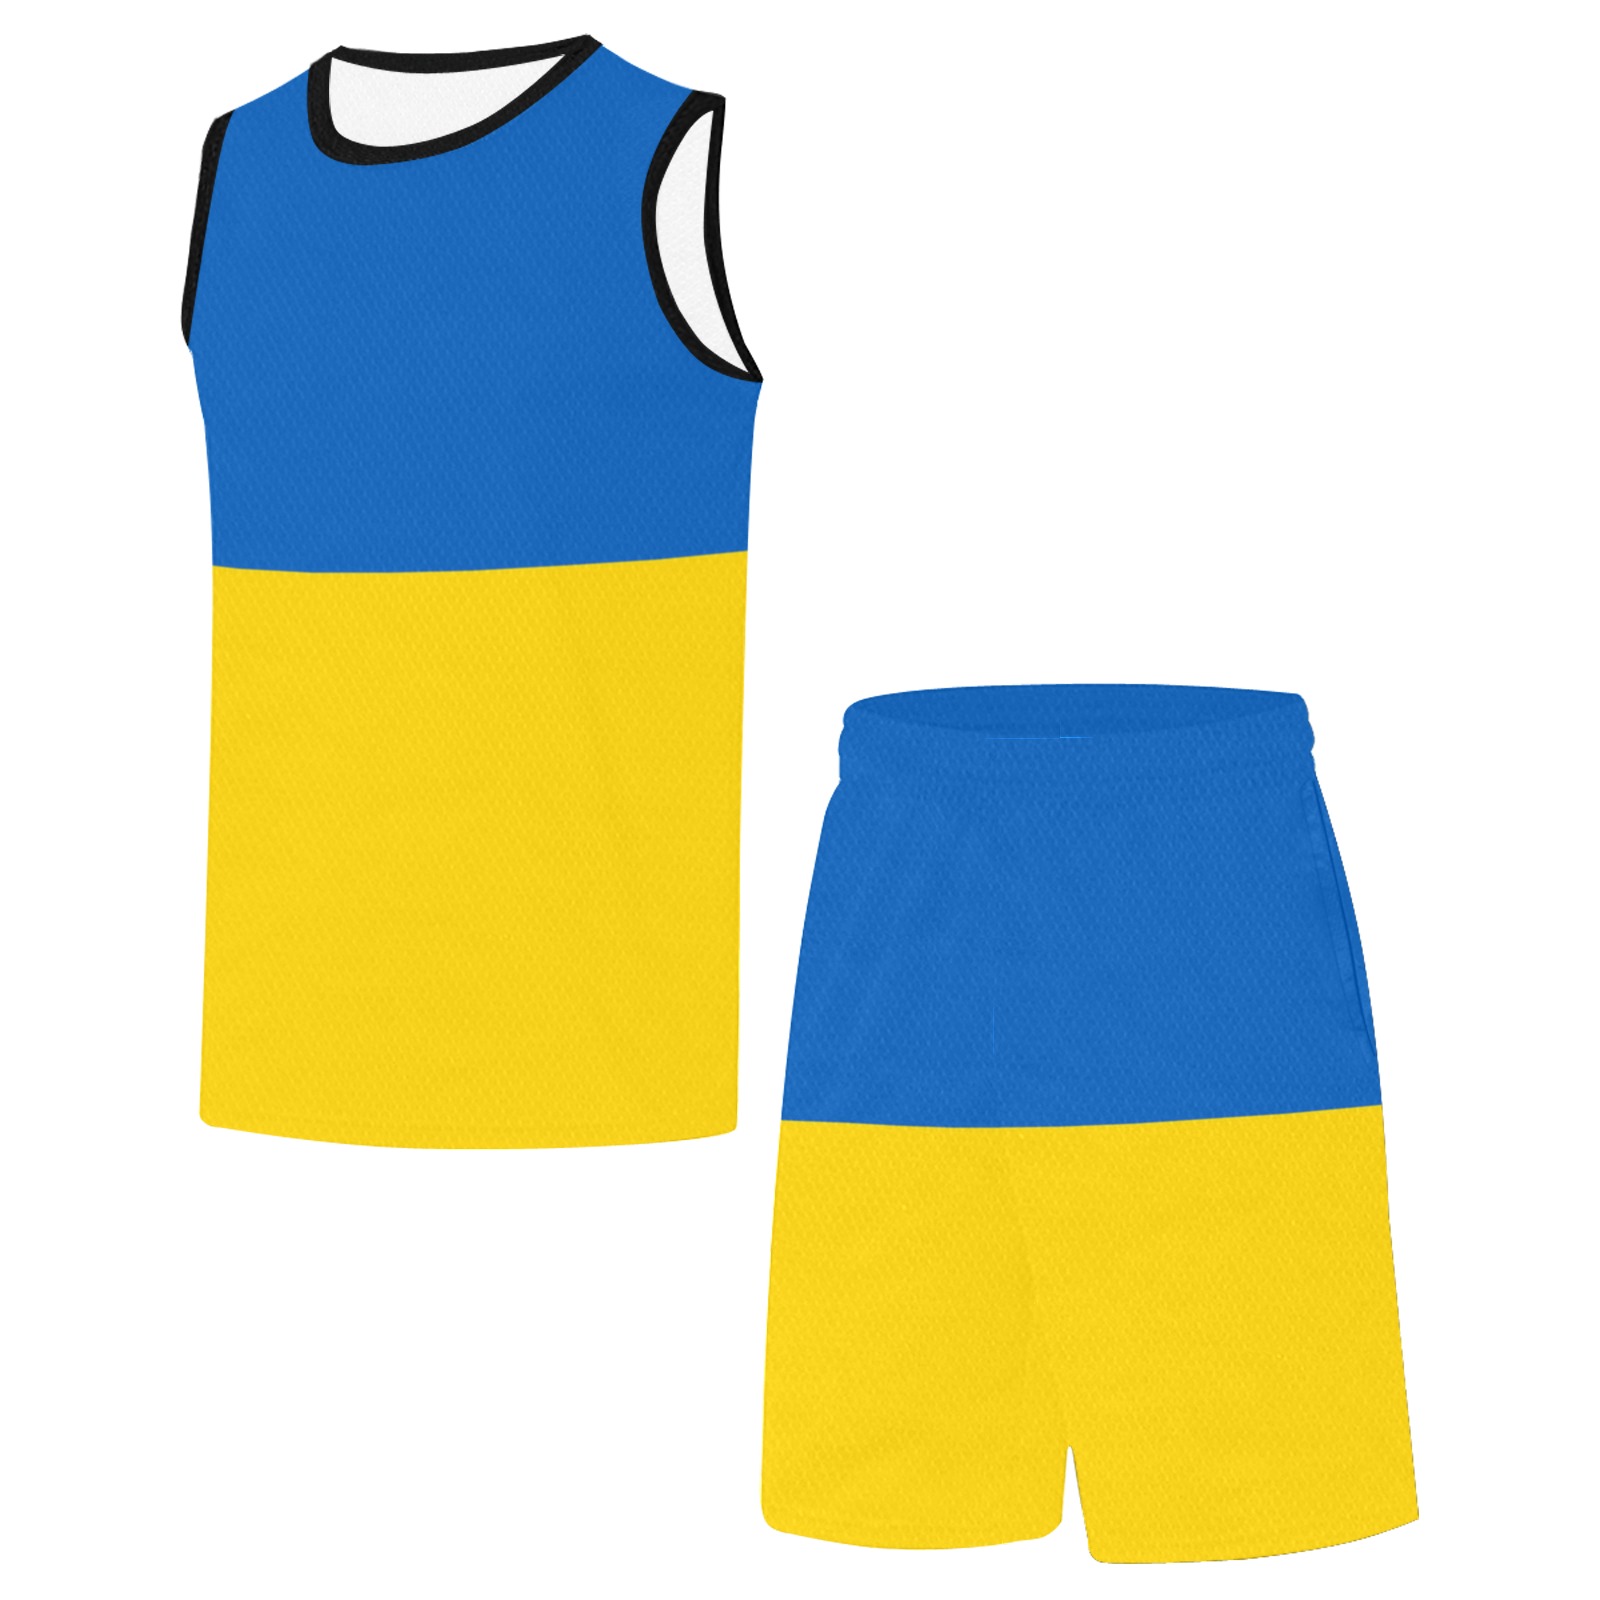 UKRAINE Basketball Uniform with Pocket